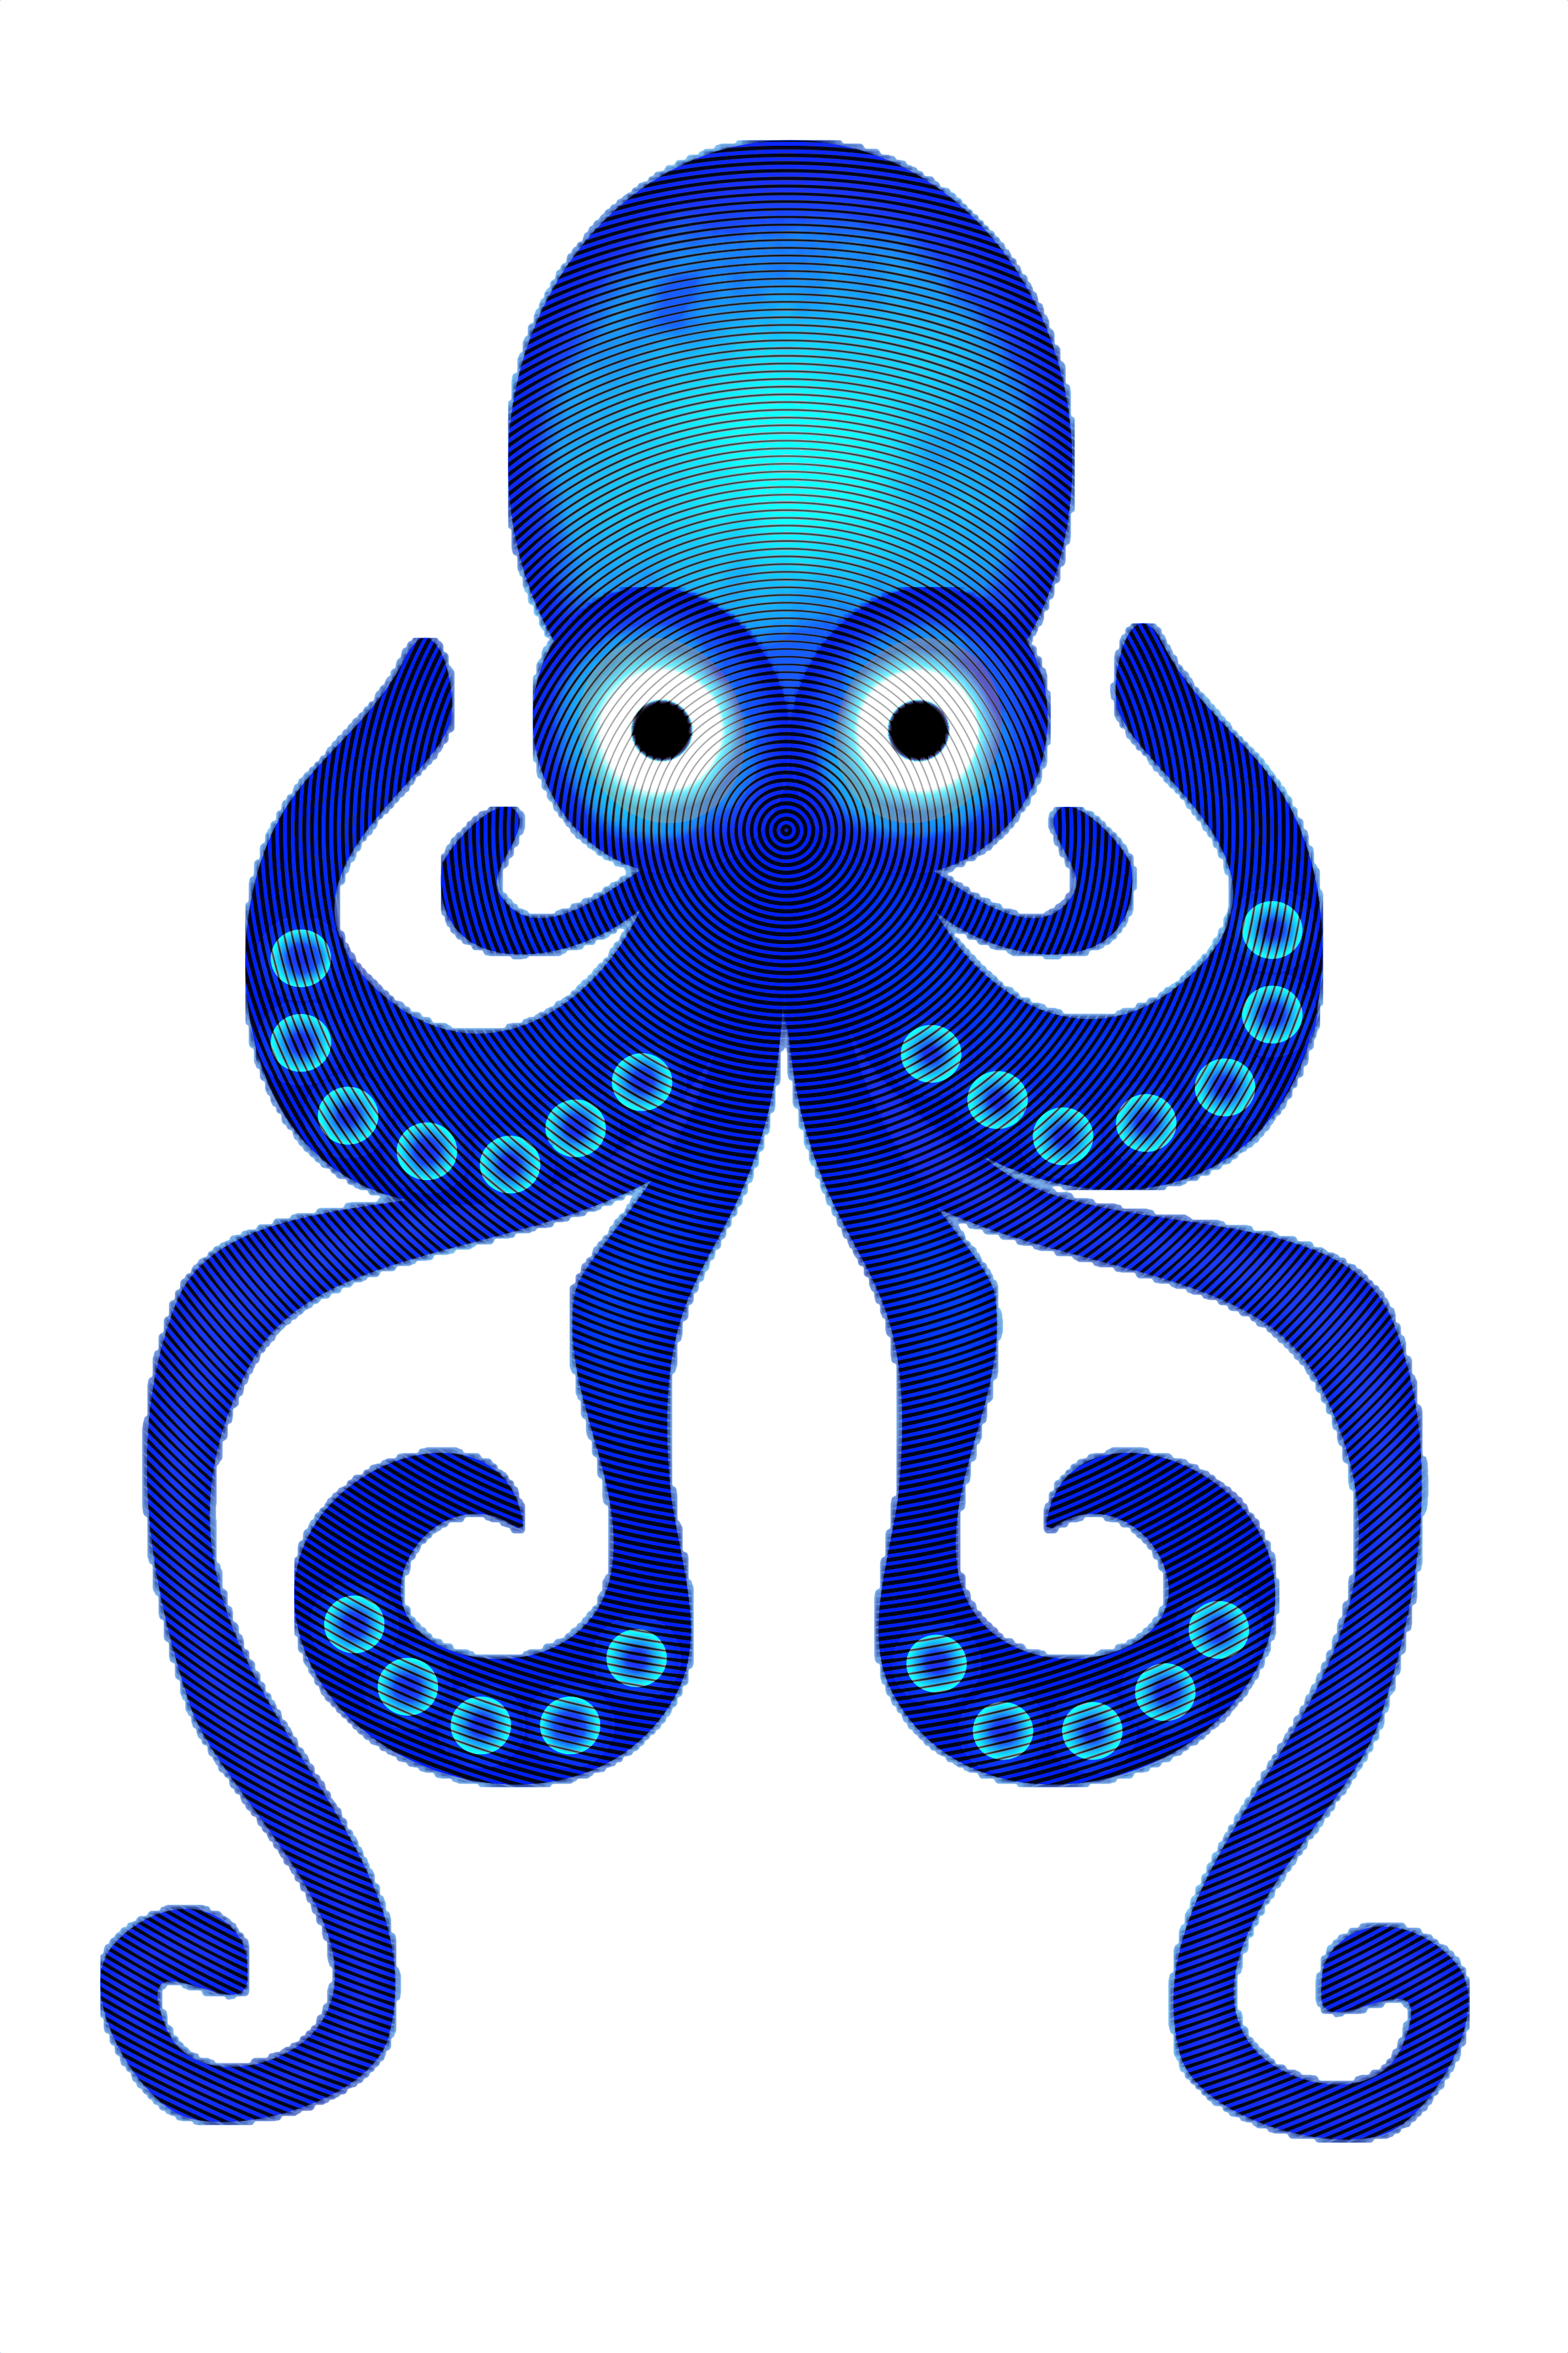 Free clipart octopus. Jokingart com download printable